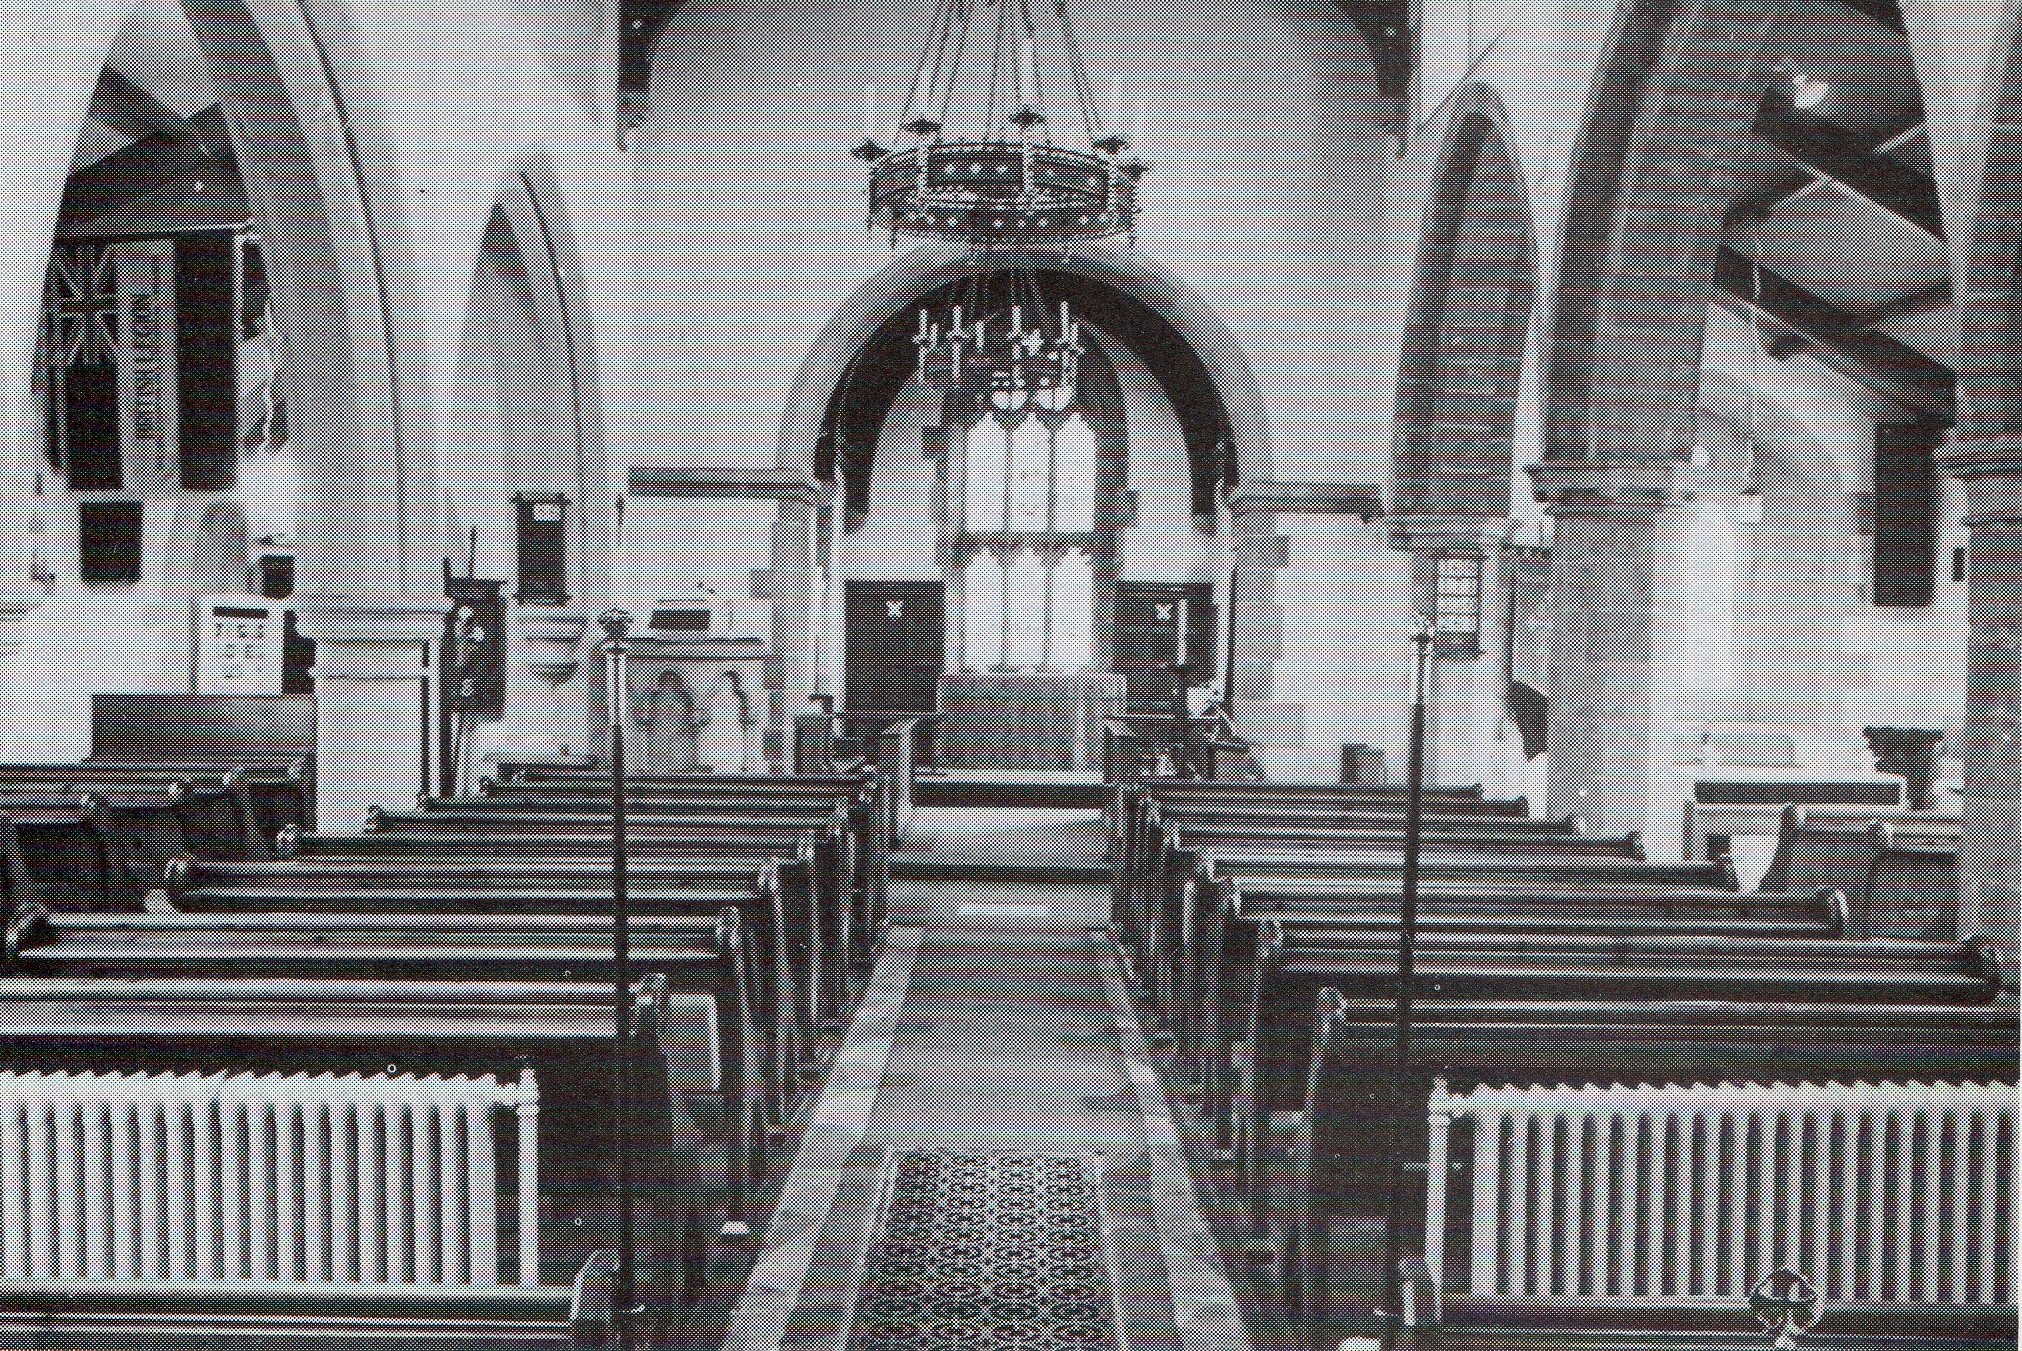 Skegby Church interior